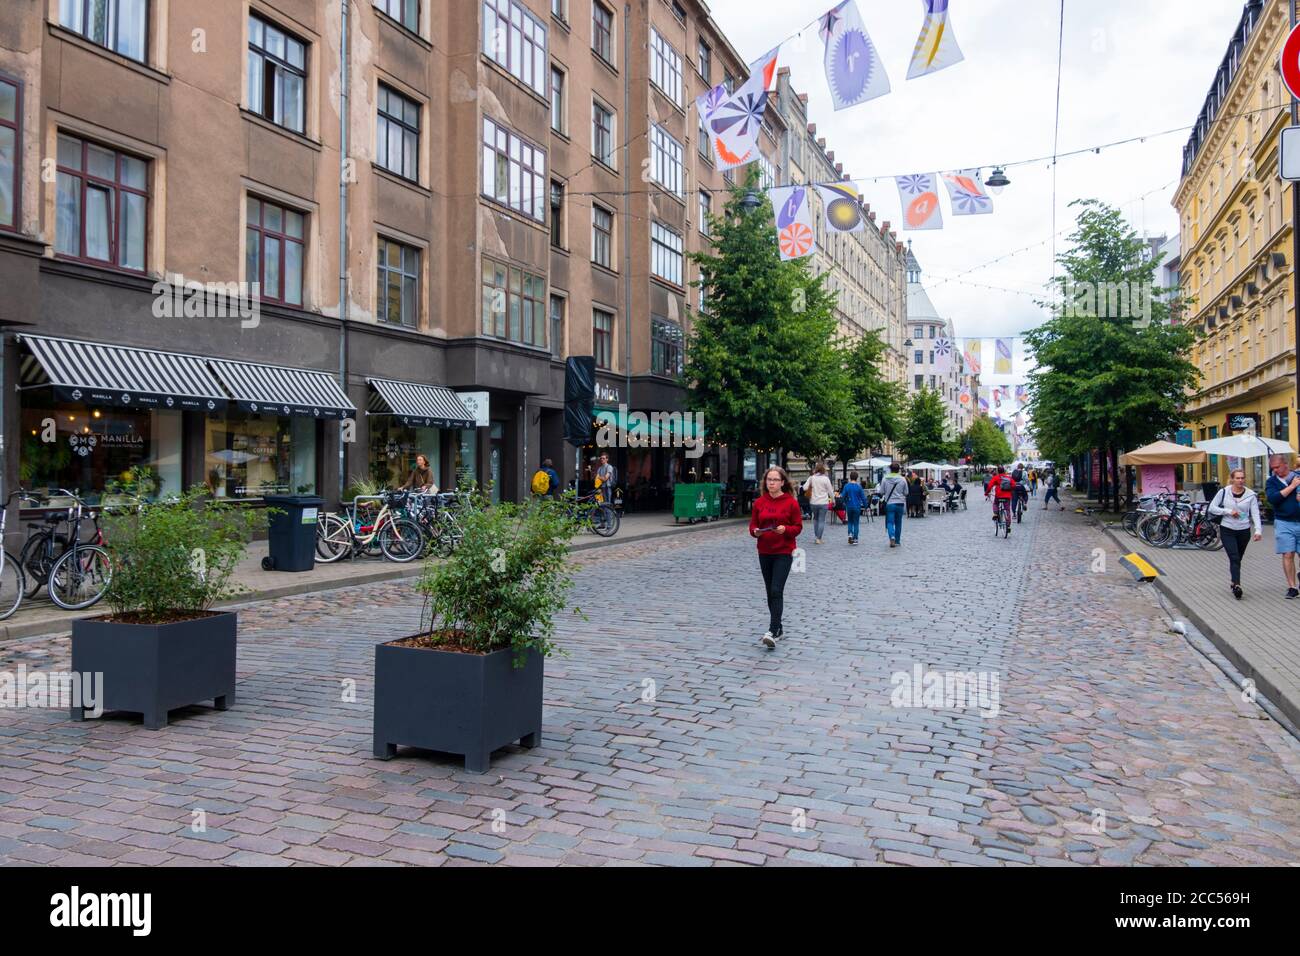 Terbatas iela, summertime pedestrian street, Centrs, central Riga, Latvia Stock Photo